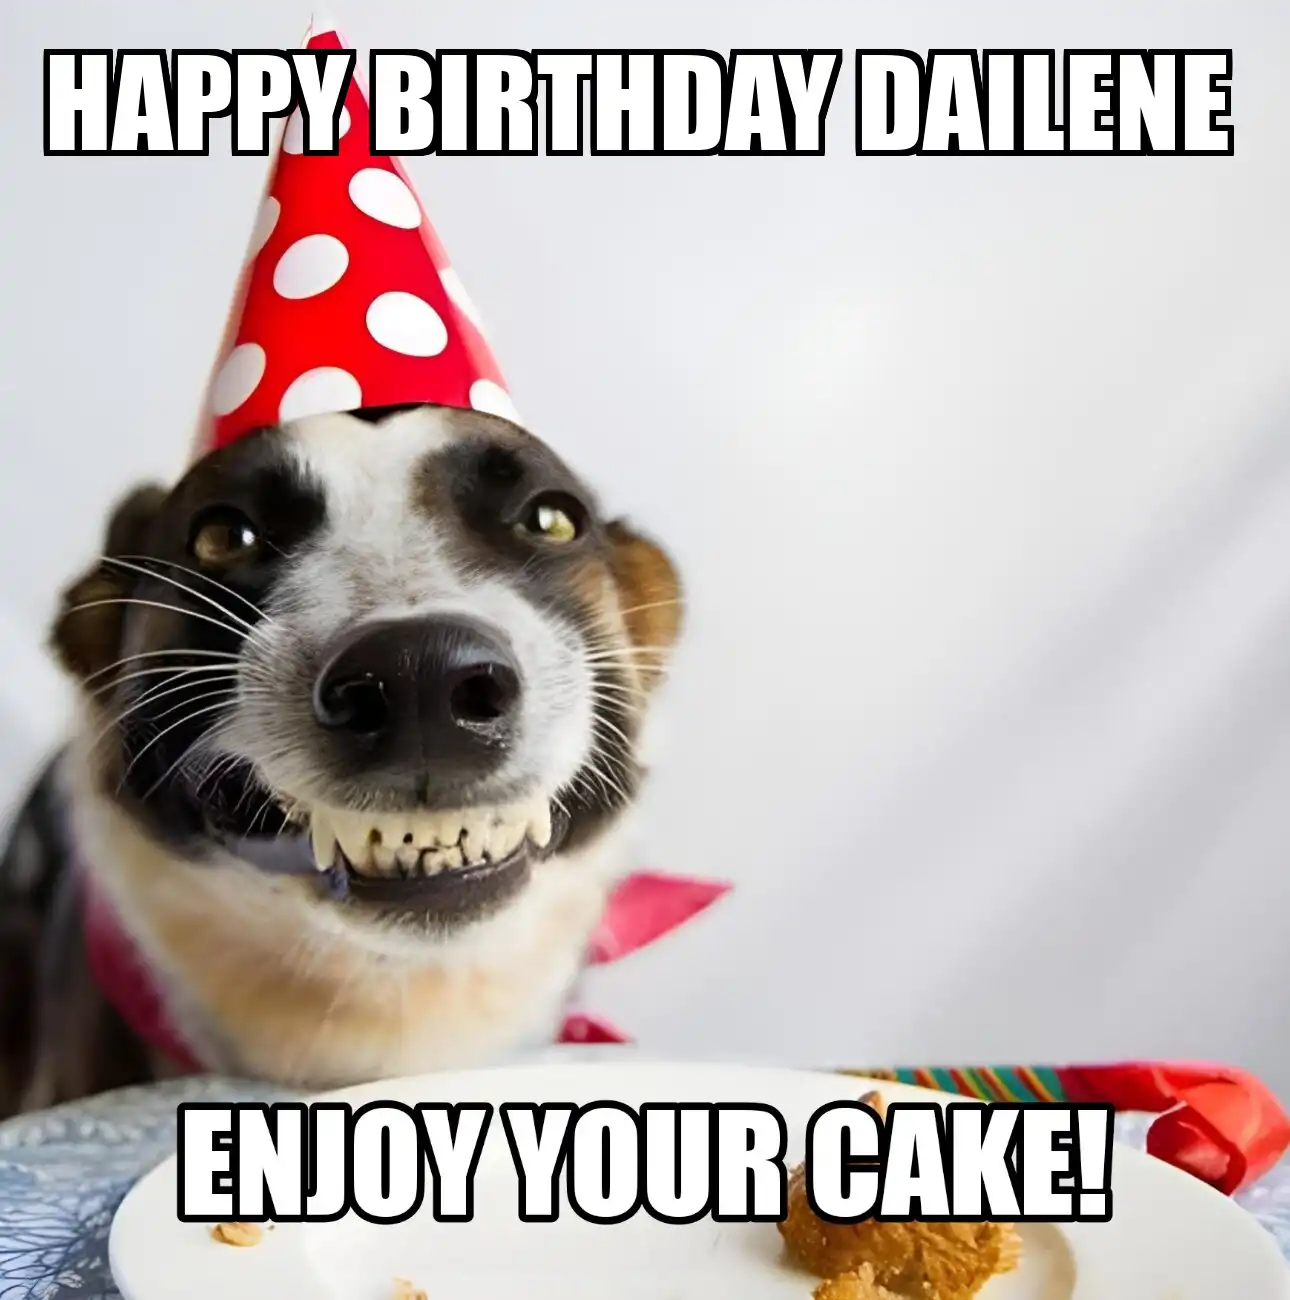 Happy Birthday Dailene Enjoy Your Cake Dog Meme